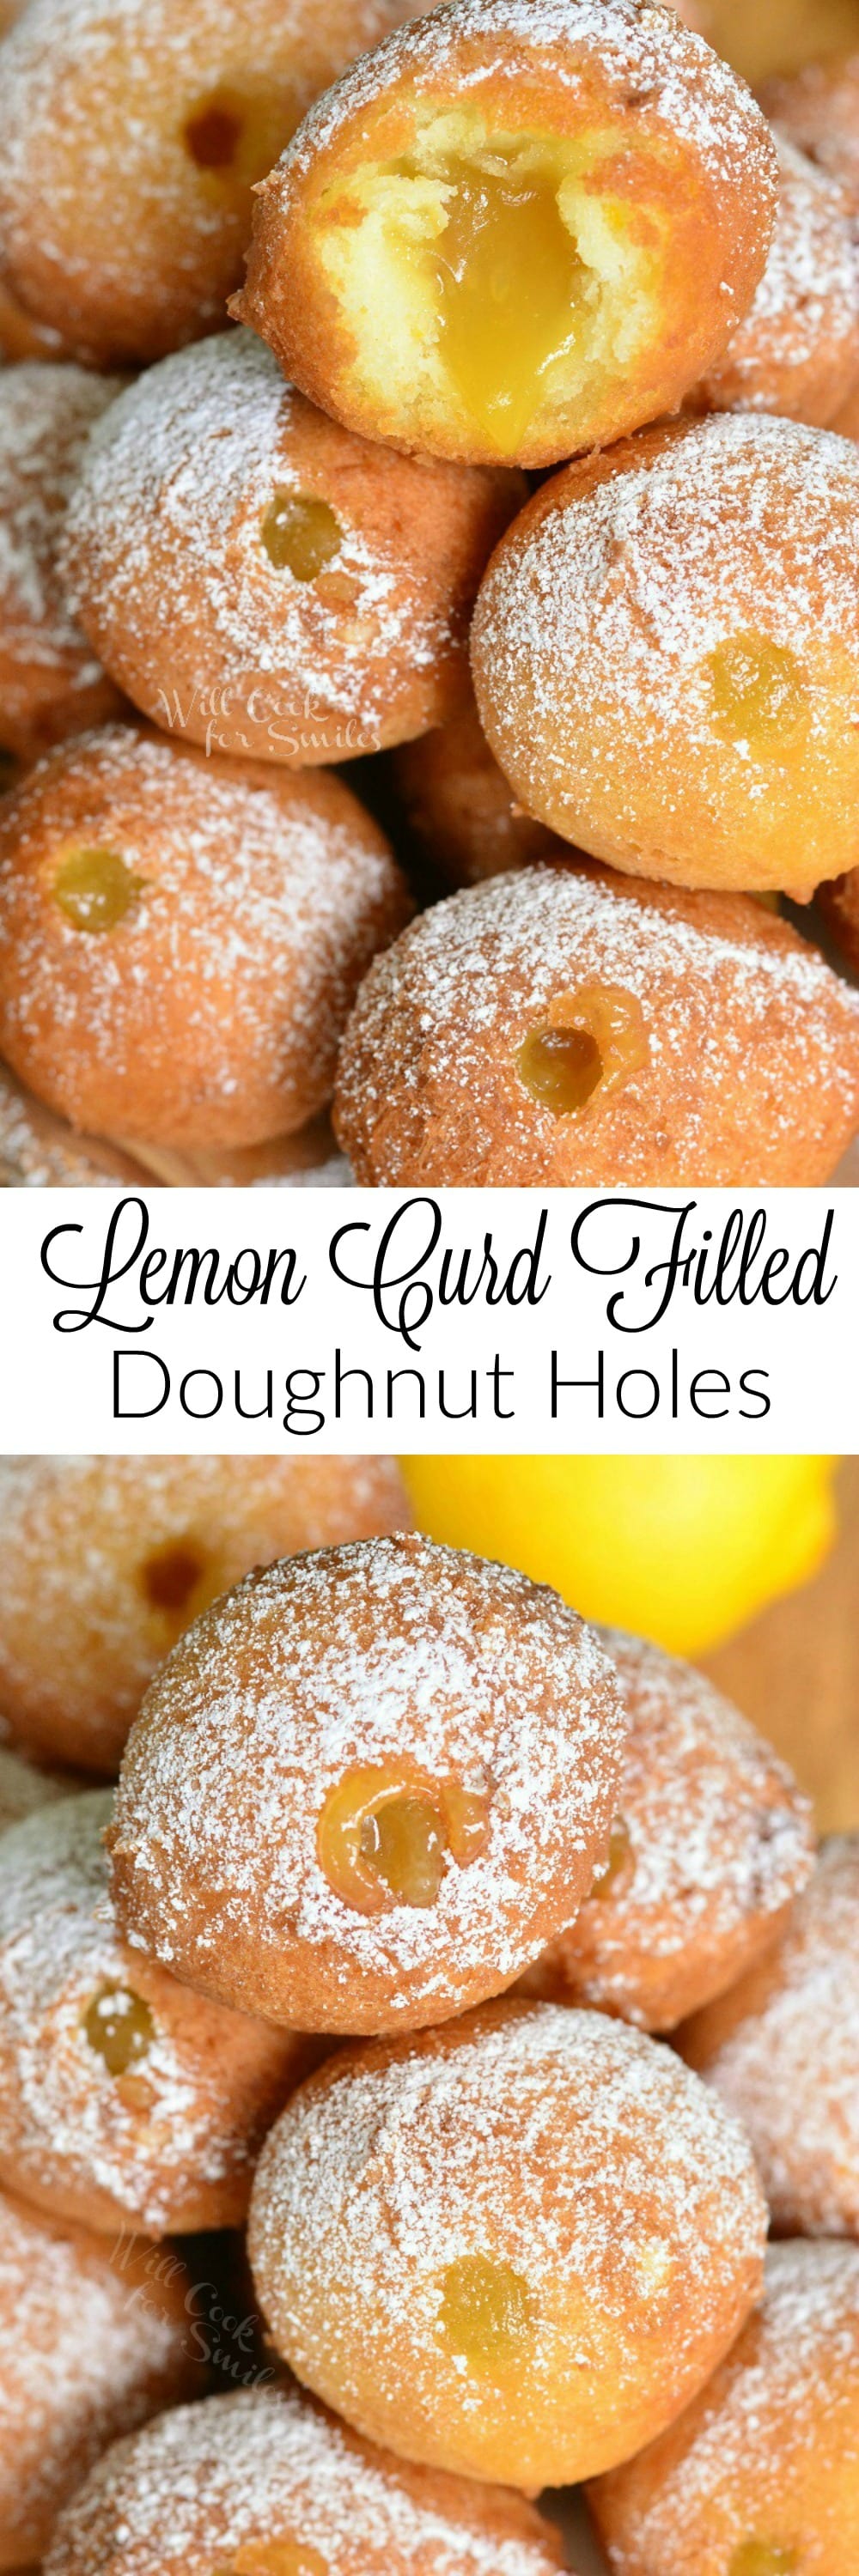 Lemon Curd Filled Doughnut Holes collage 